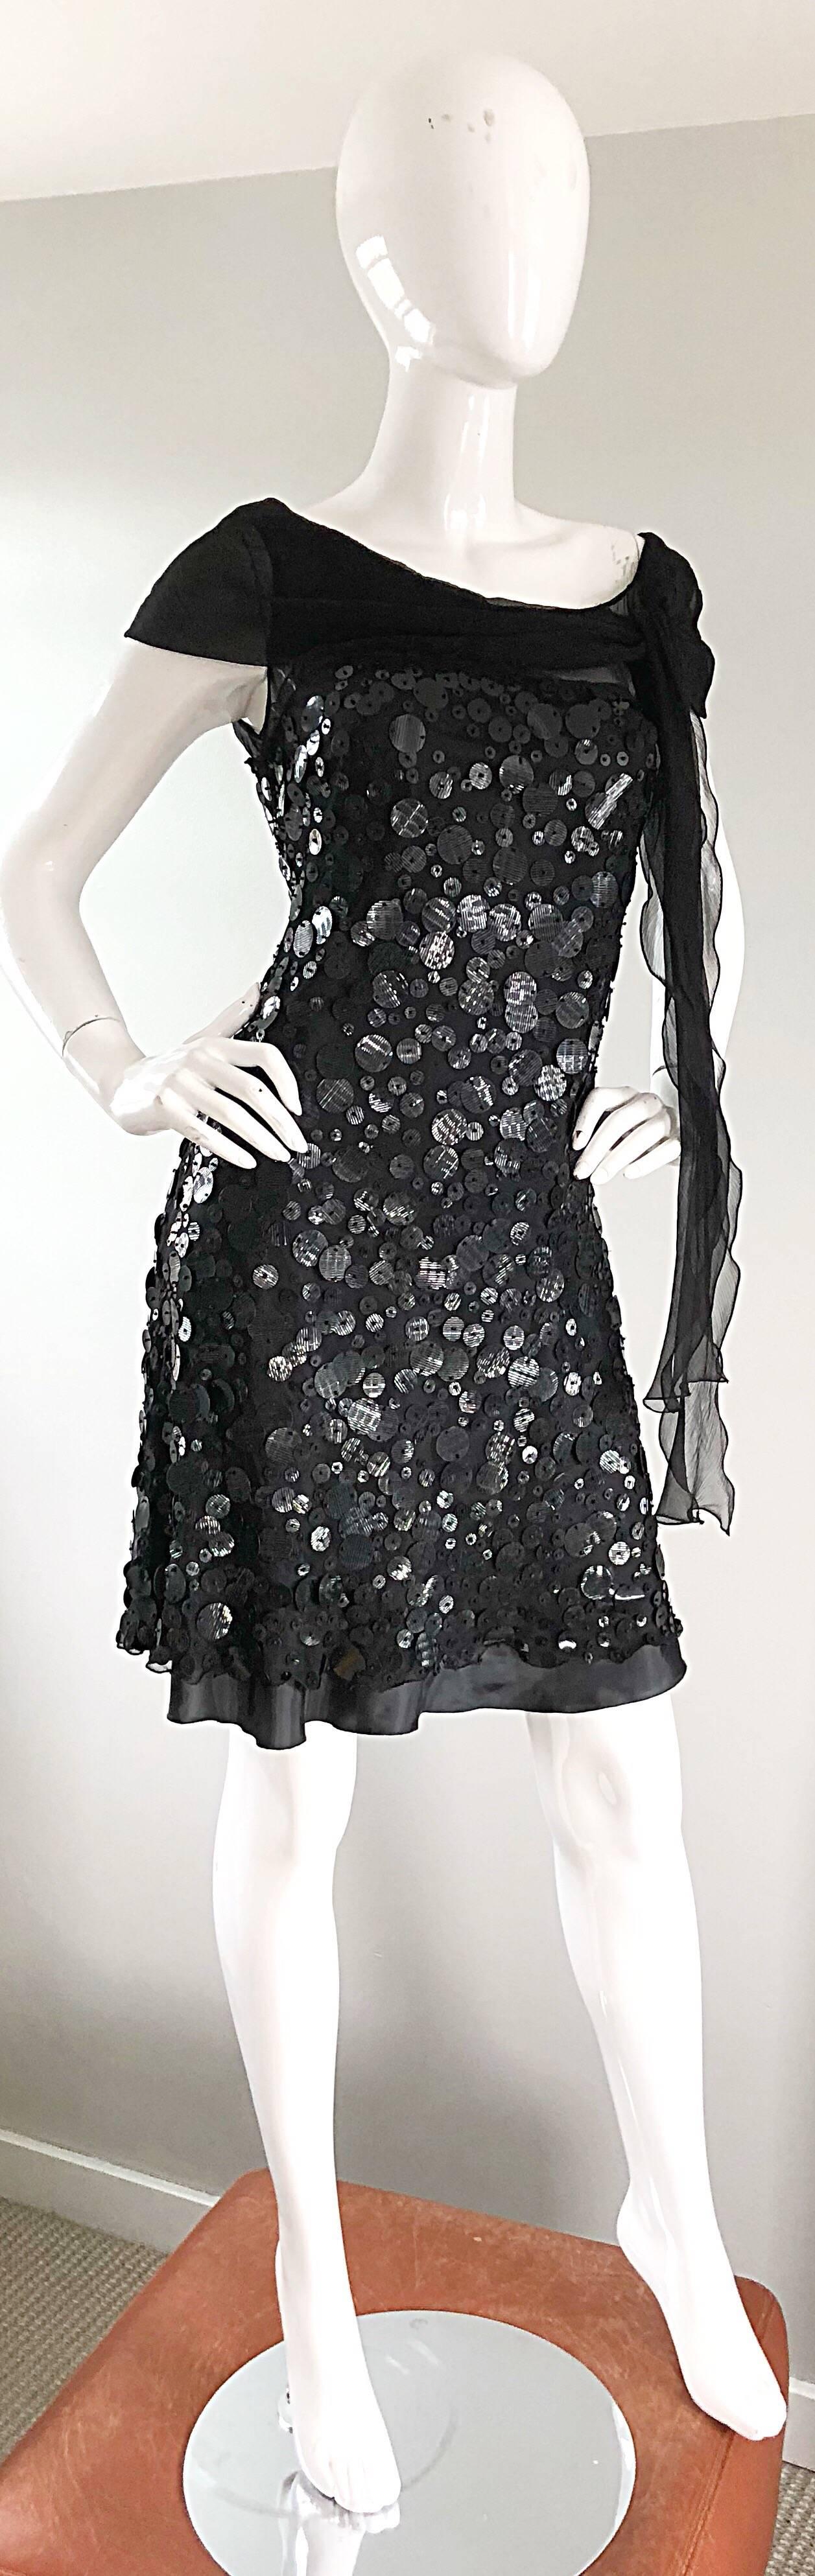 Moschino Cheap & Chic 1990s Black Size 6 Chiffon Paillettes Sequin Vintage Dress For Sale 2